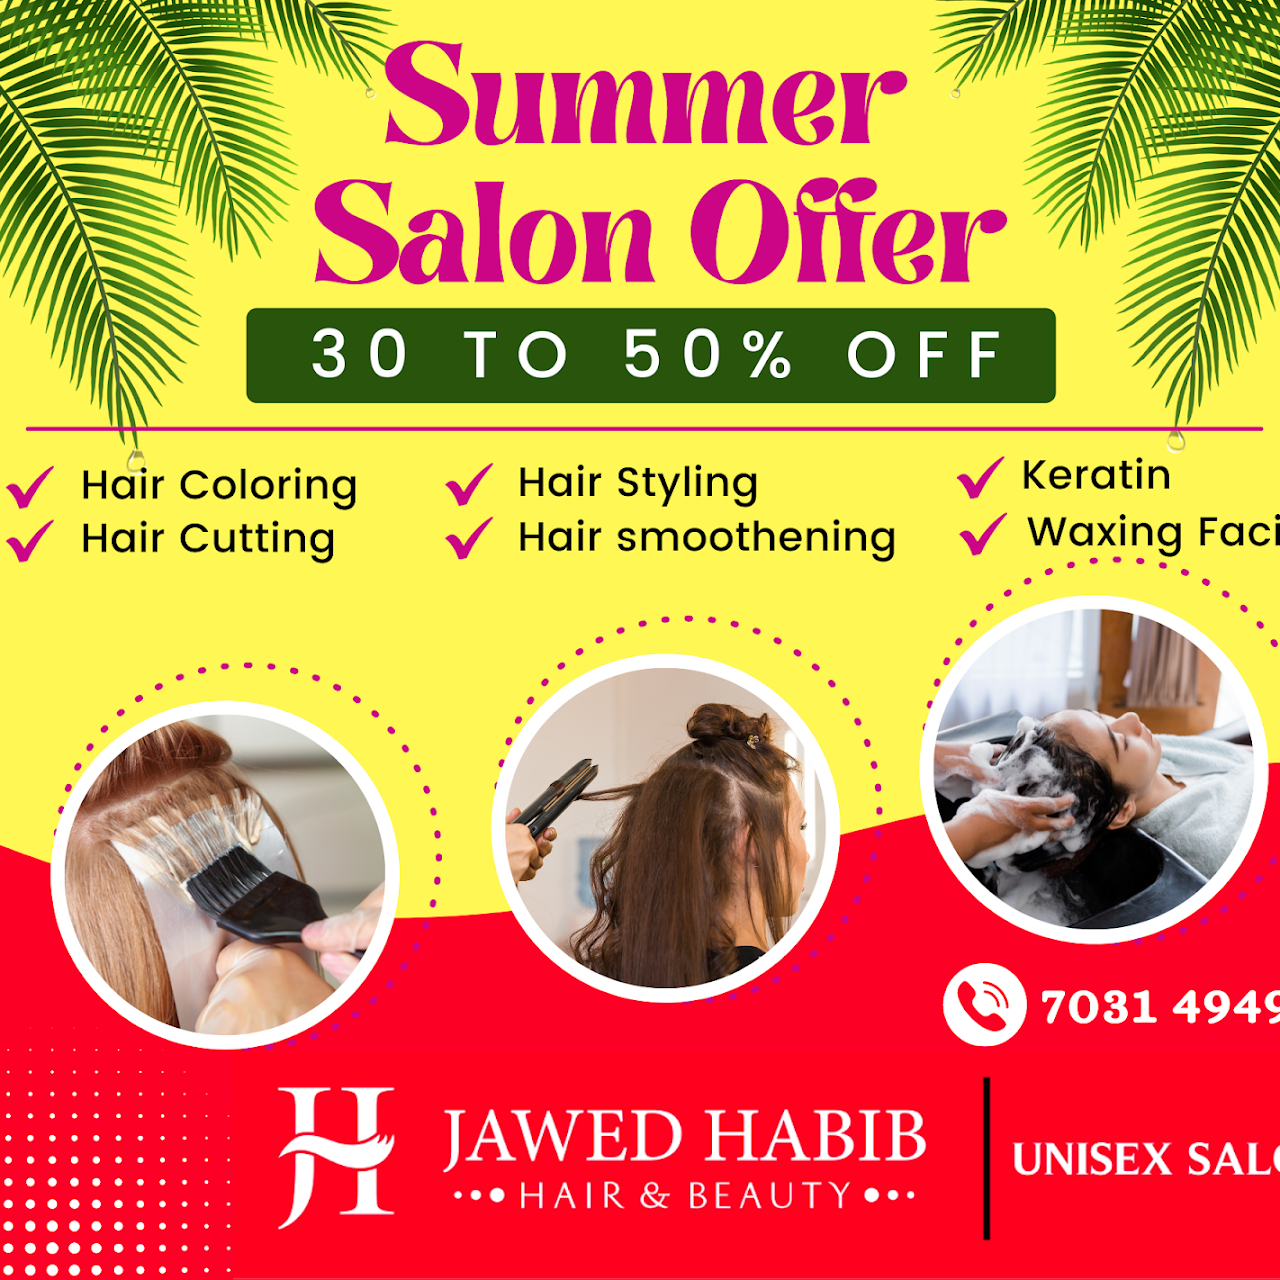 Jawed Habib Salon - Hair And Beauty Salon in Thane